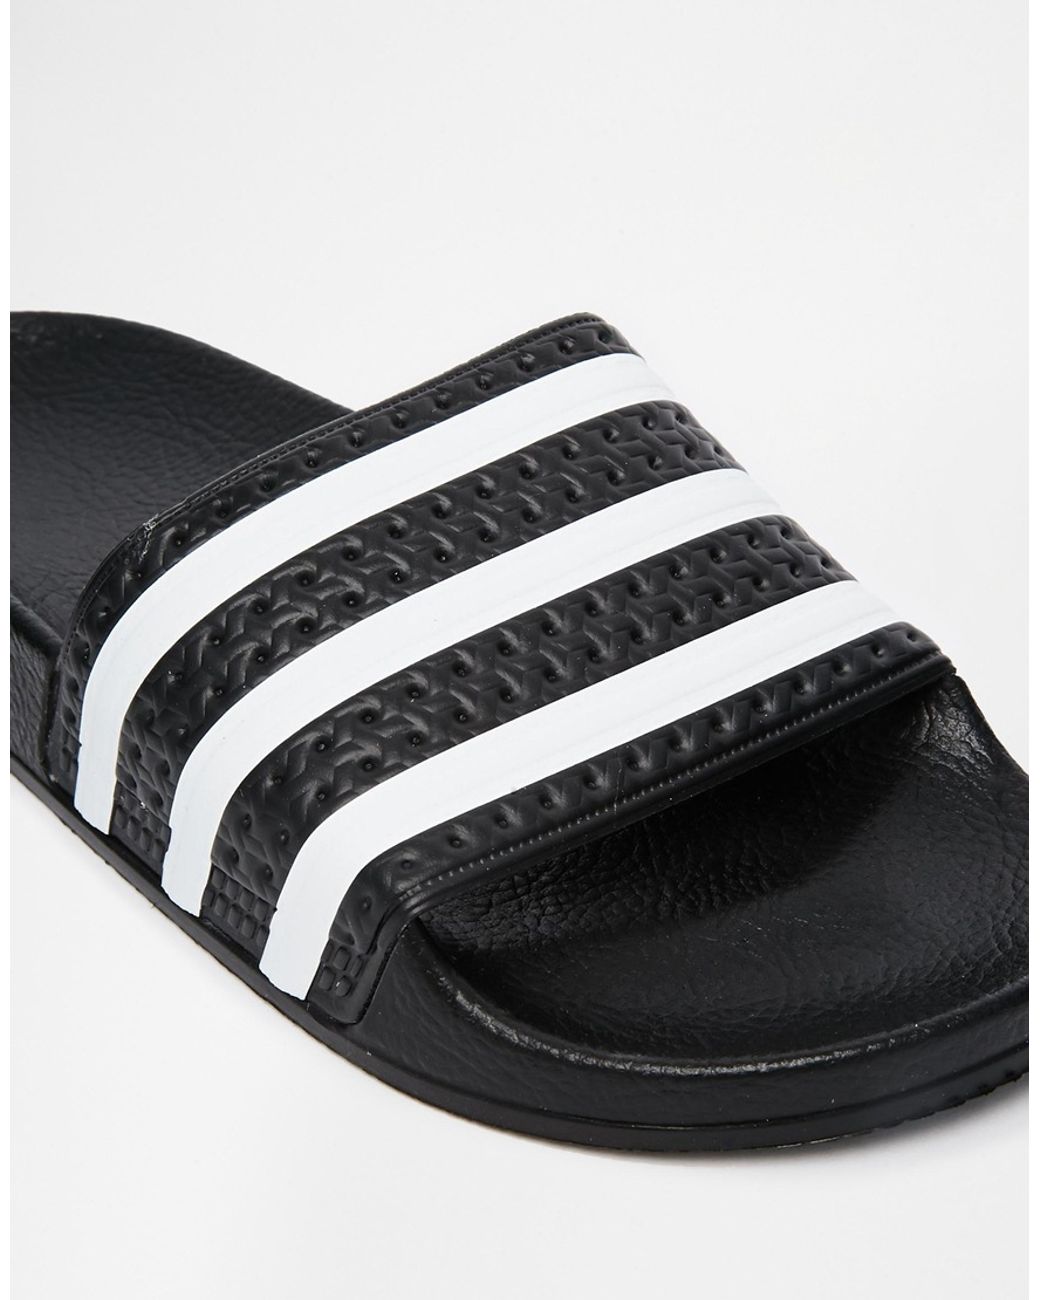 Originals Originals Adilette Black & White Stripe Slider Sandals